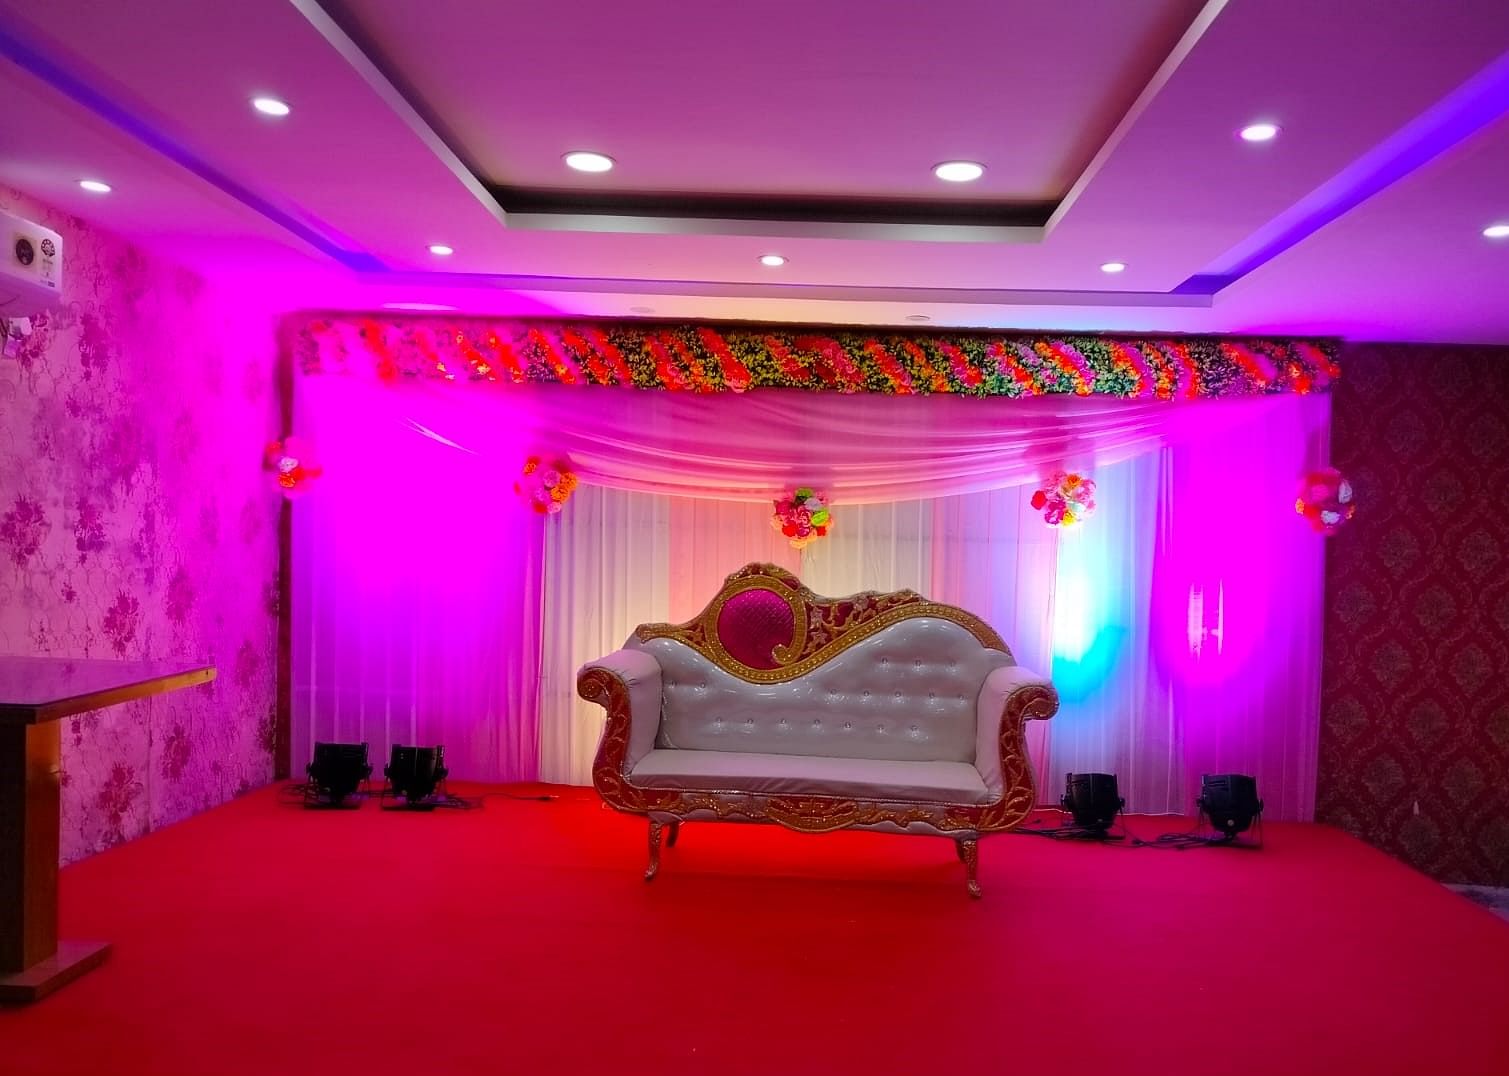 KTG Banquet Hall in Sector 62, Noida